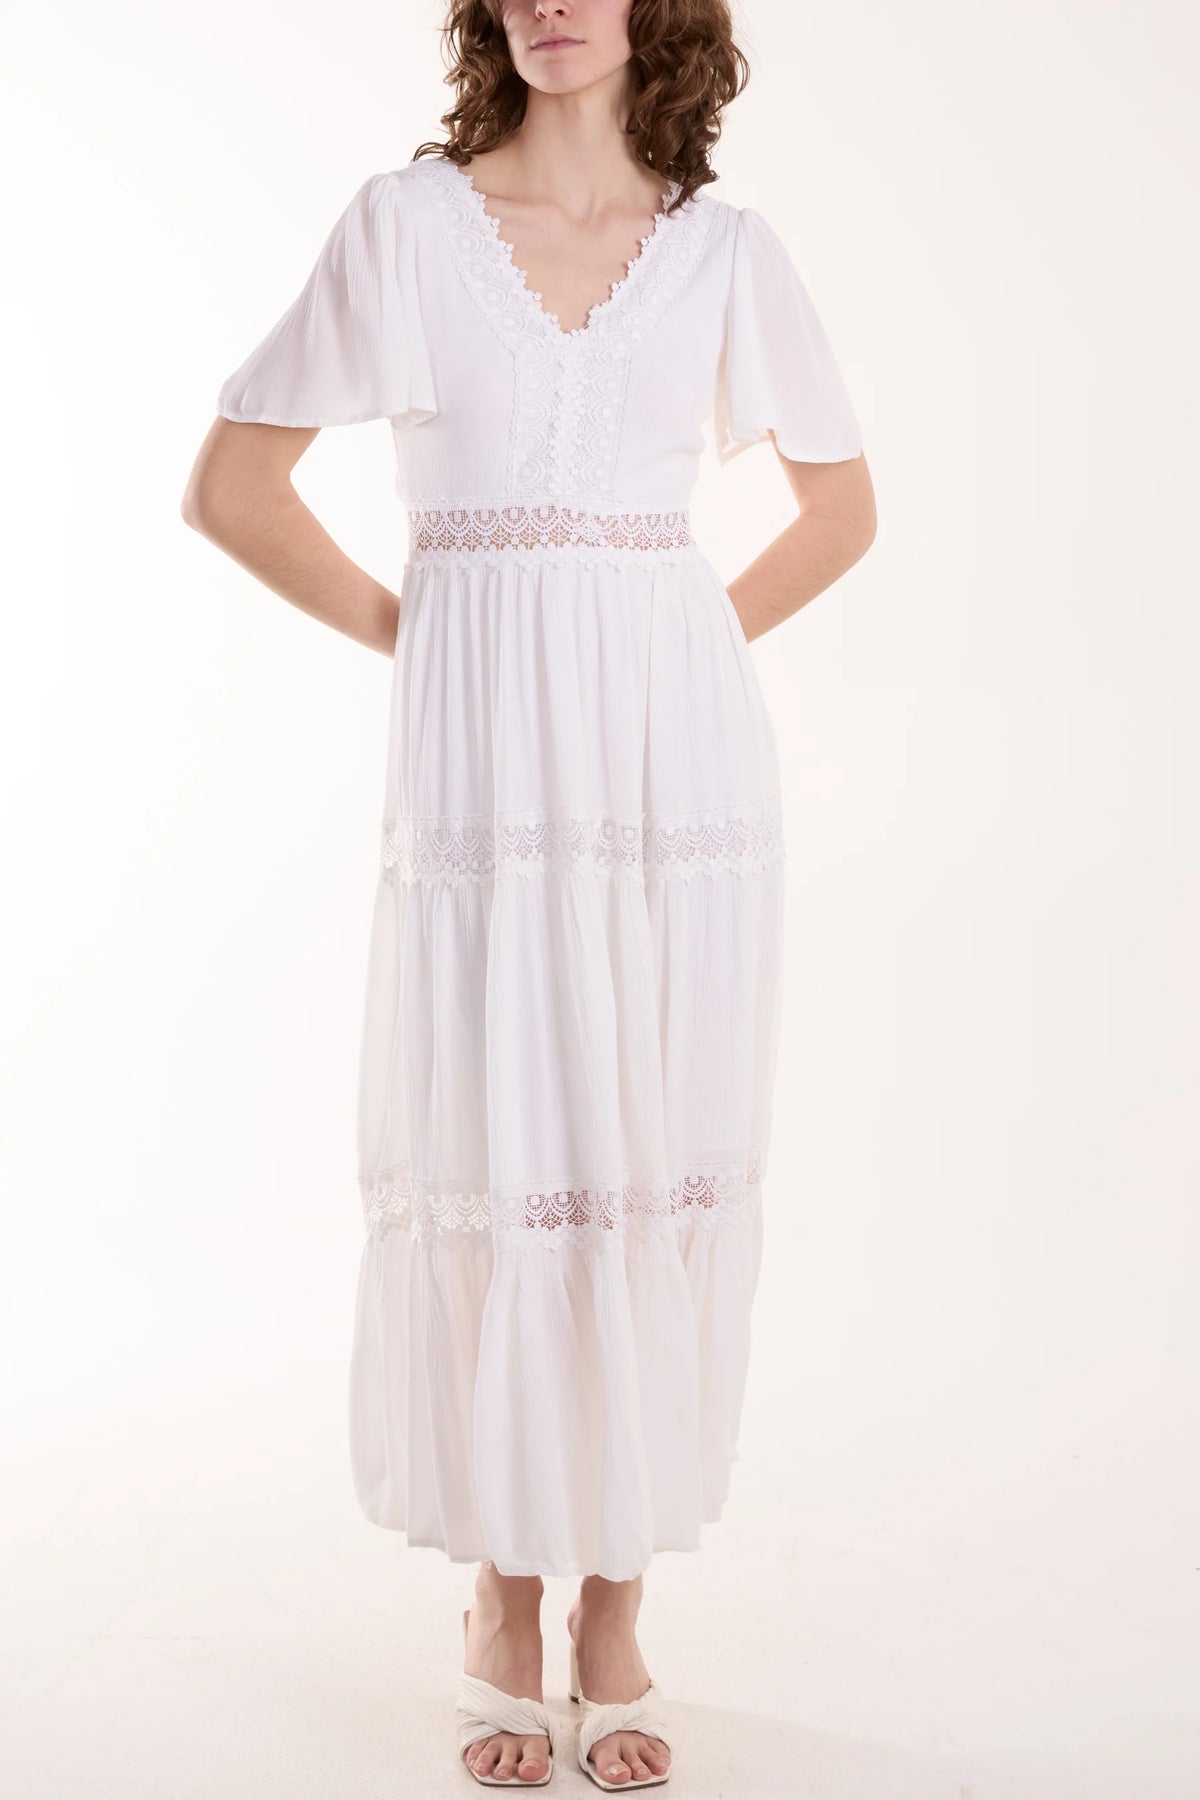 LMA Angel Sleeve Lace Tiered Maxi White Dress